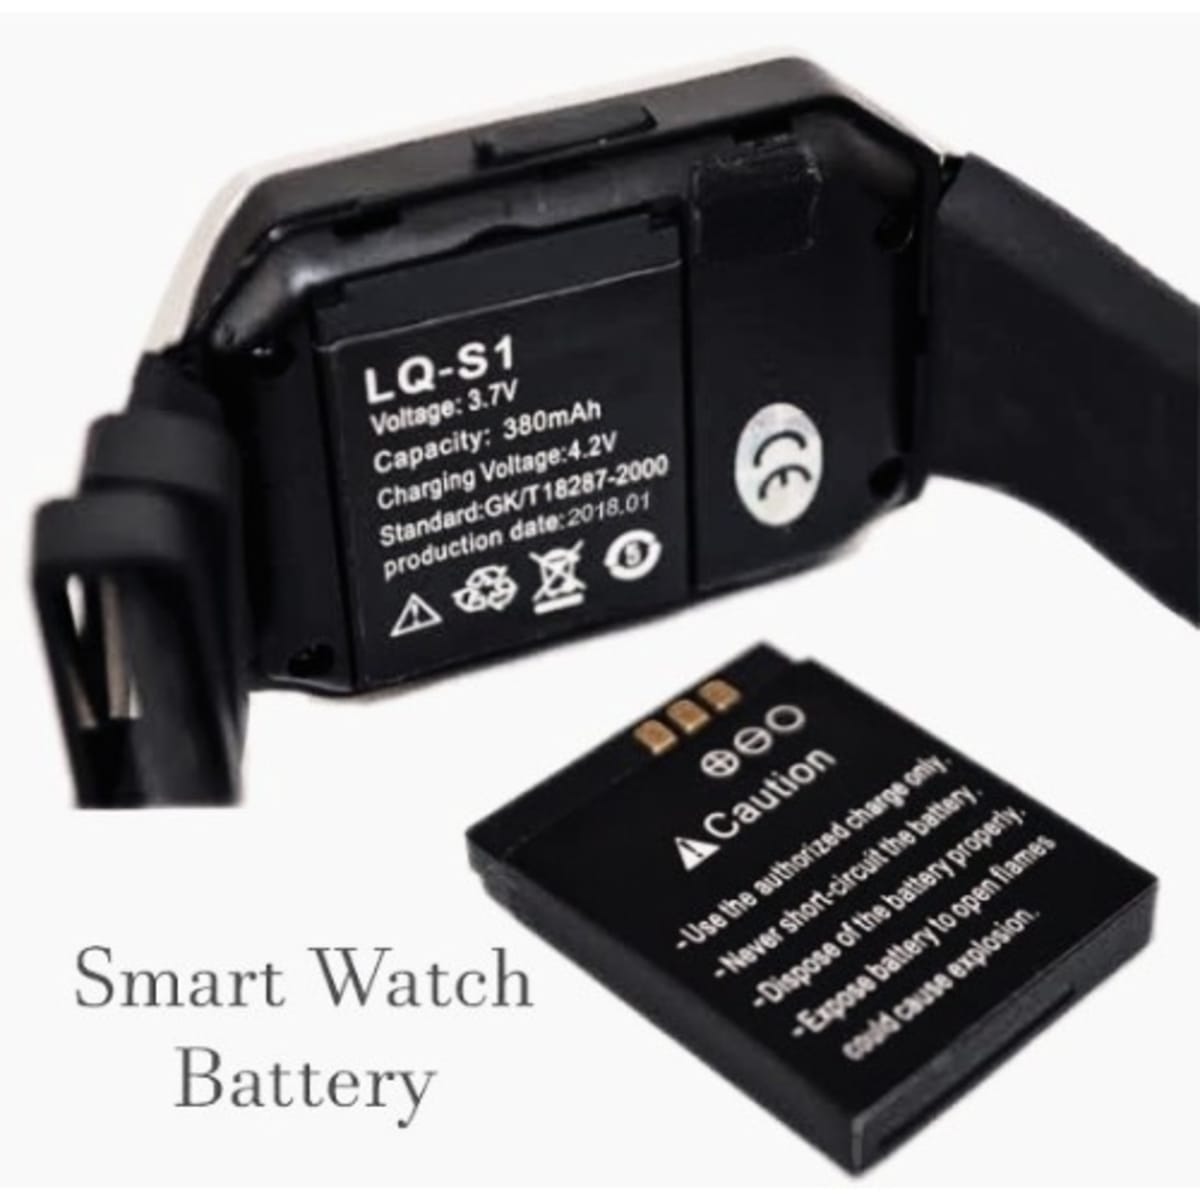 Watch battery. Аккумулятор LQ-s1 380mah. LQ s1 смарт часы. Аккумуляторная батарея LQ s1. Аккумулятор для Smart часов LQ-s1.